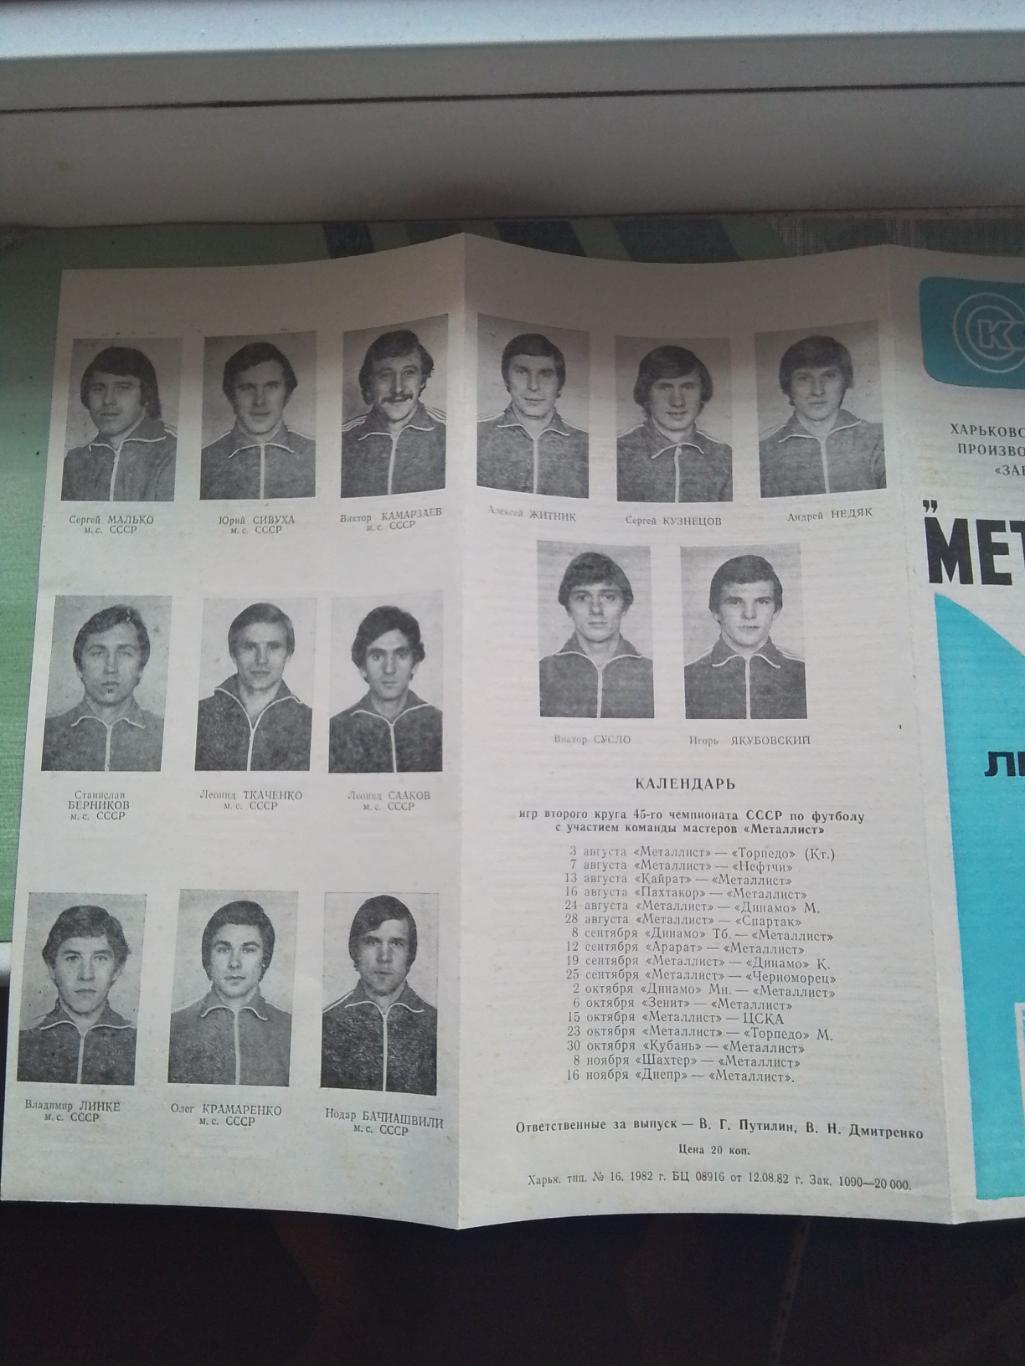 Фото буклет Металлист Харьков 1982 1